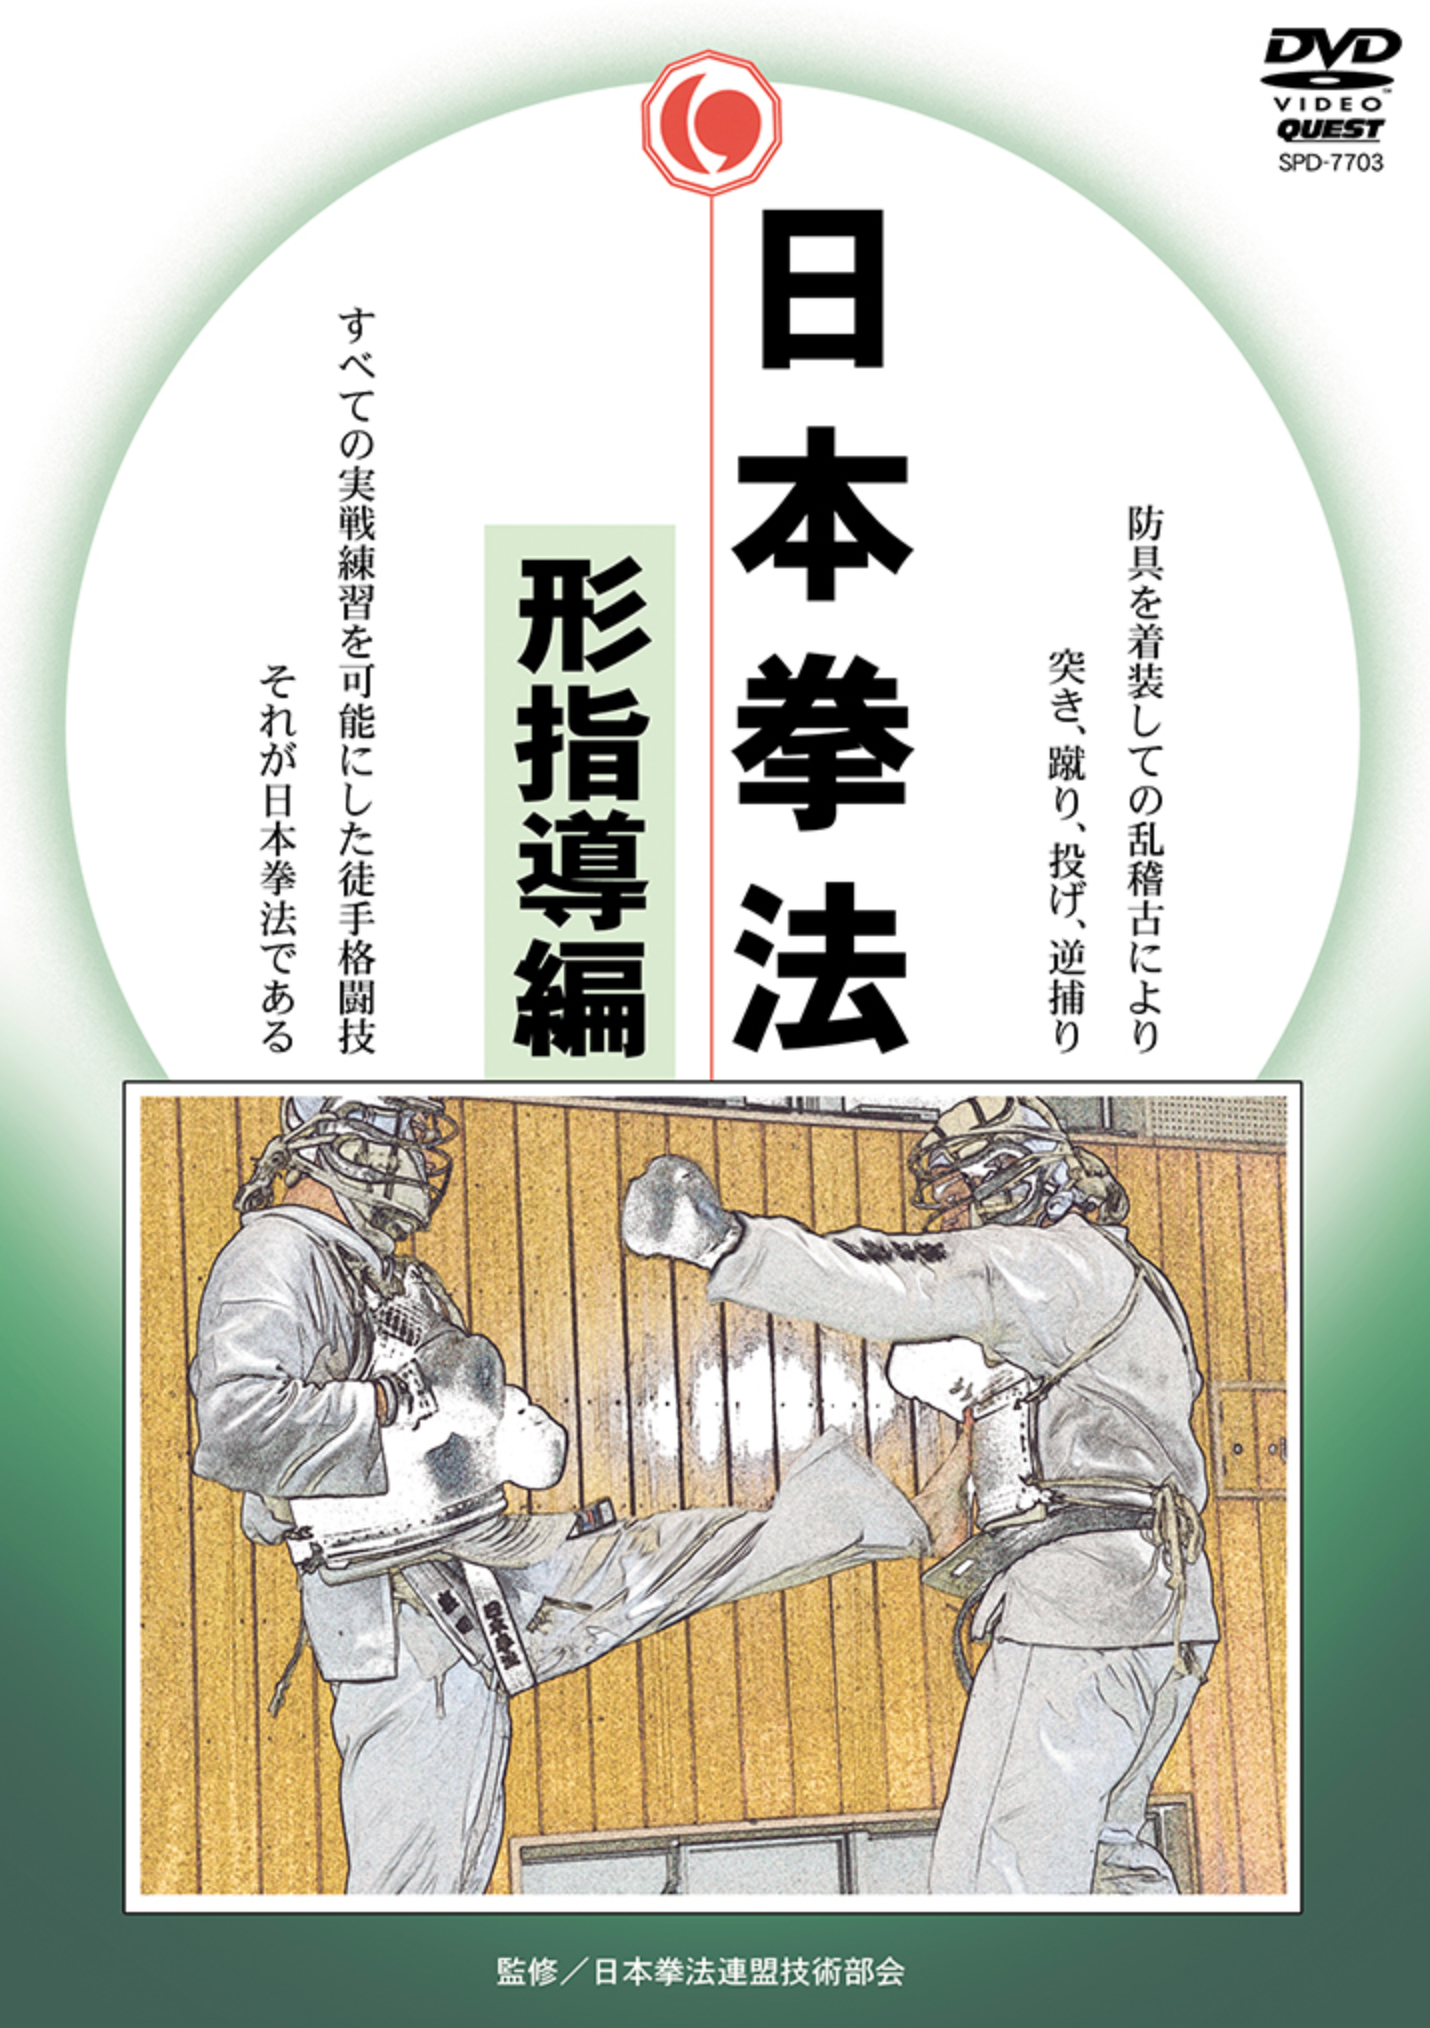 Japanese Kenpo DVD Vol 3: Forms by Yutaka Dohi - Budovideos